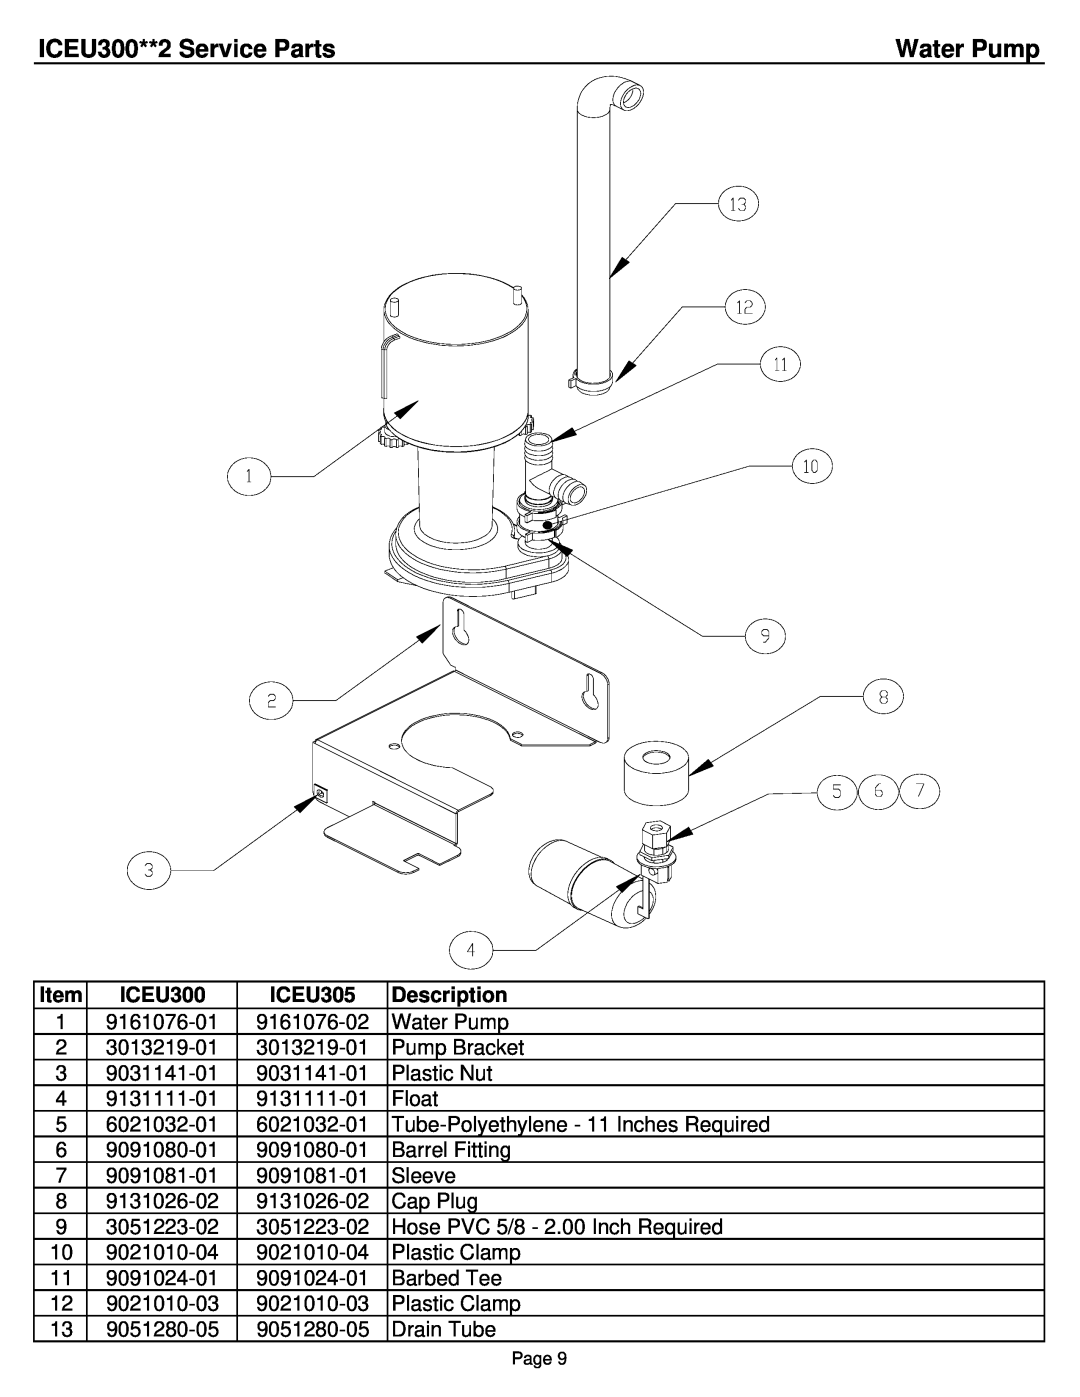 Ice-O-Matic ICEU305**2 manual Water Pump, ICEU300**2 Service Parts, Description 